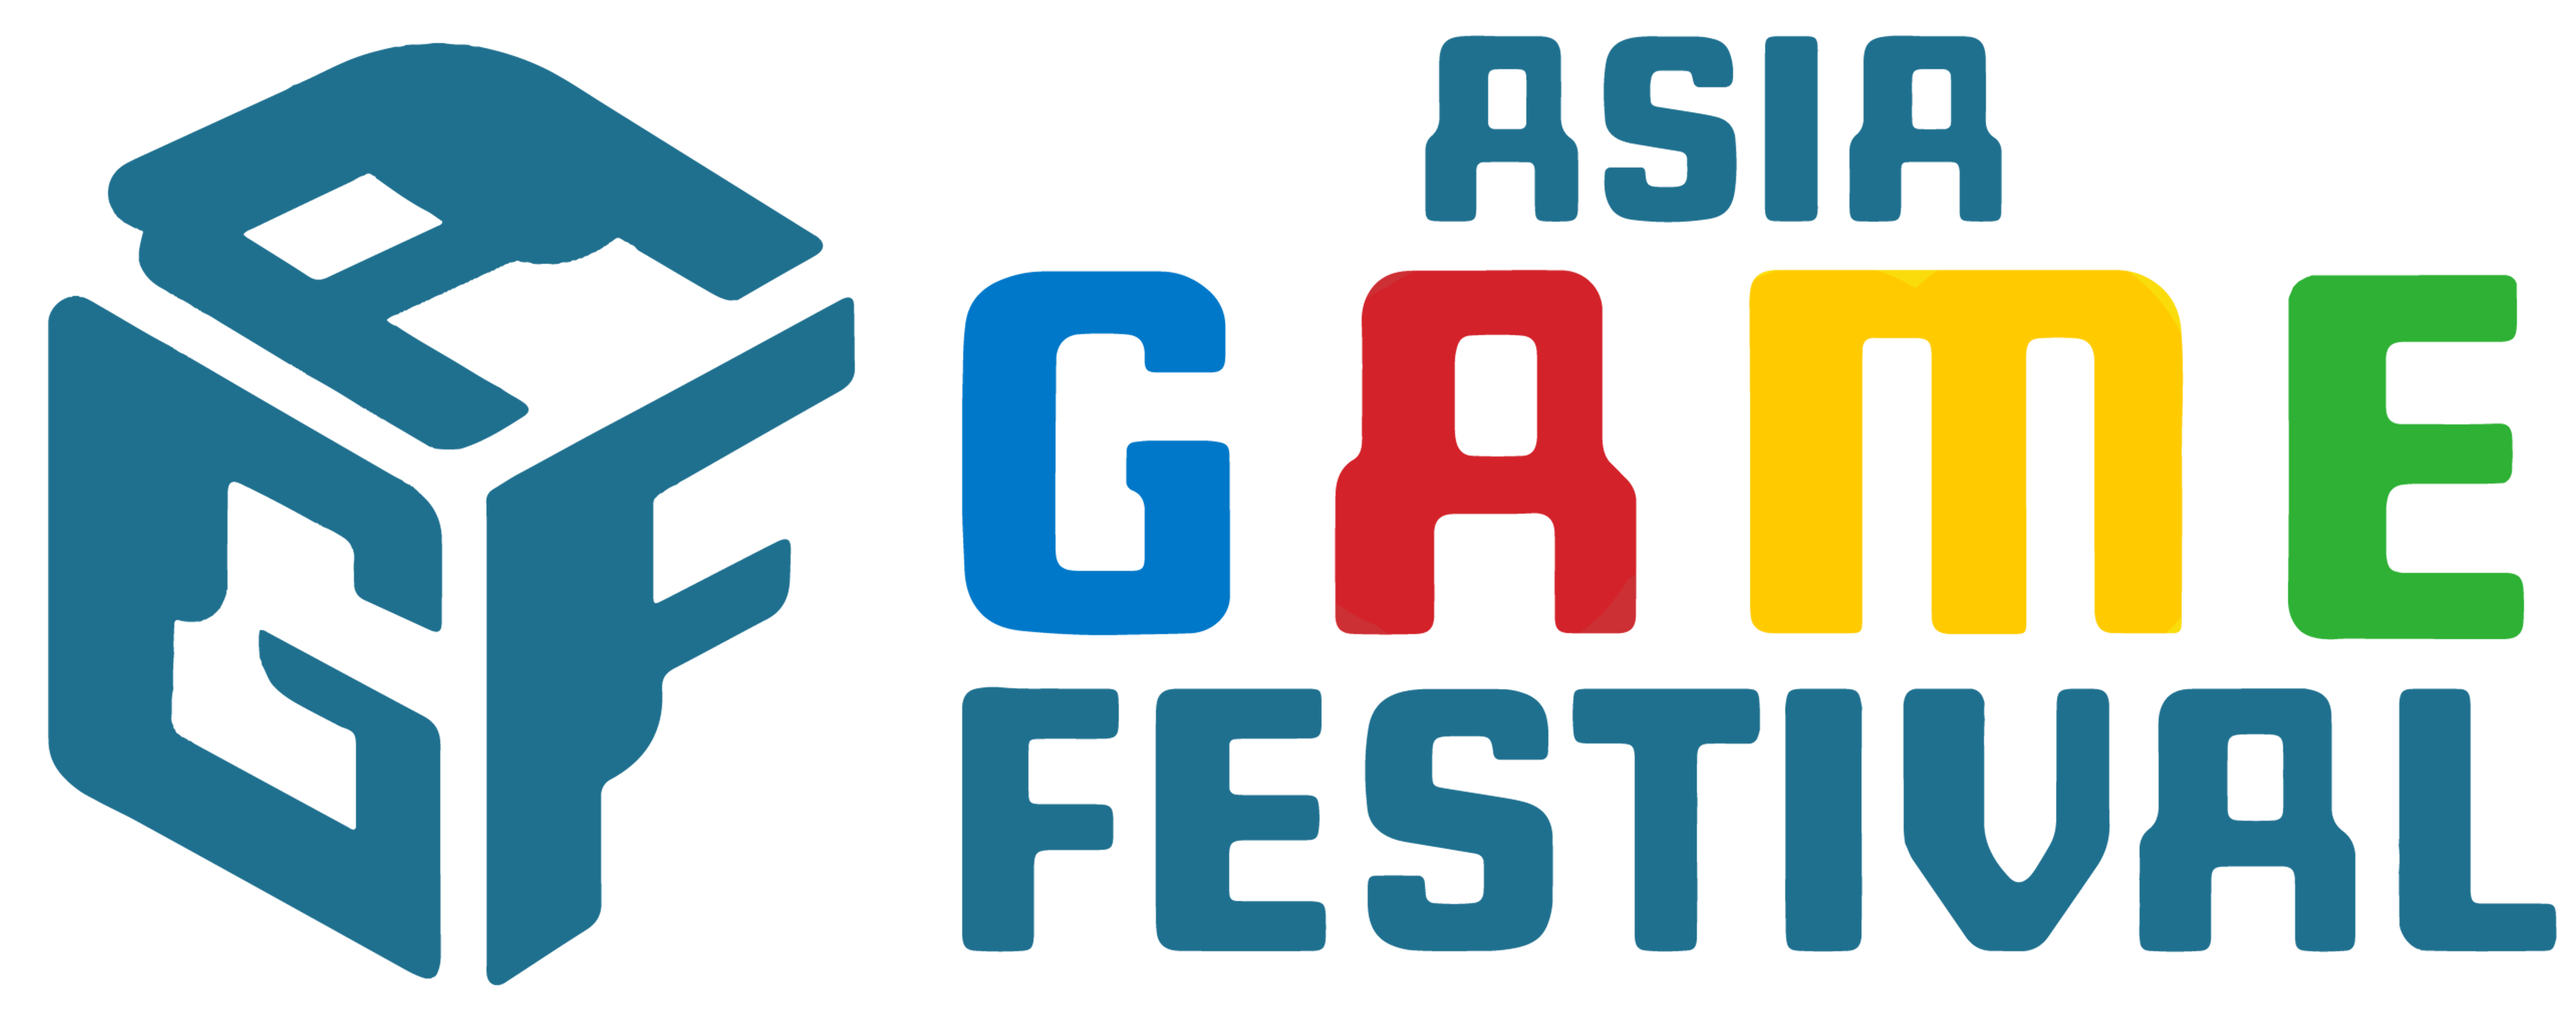 Blue Asia Logo - Home Mobile - Asia GAME Festival